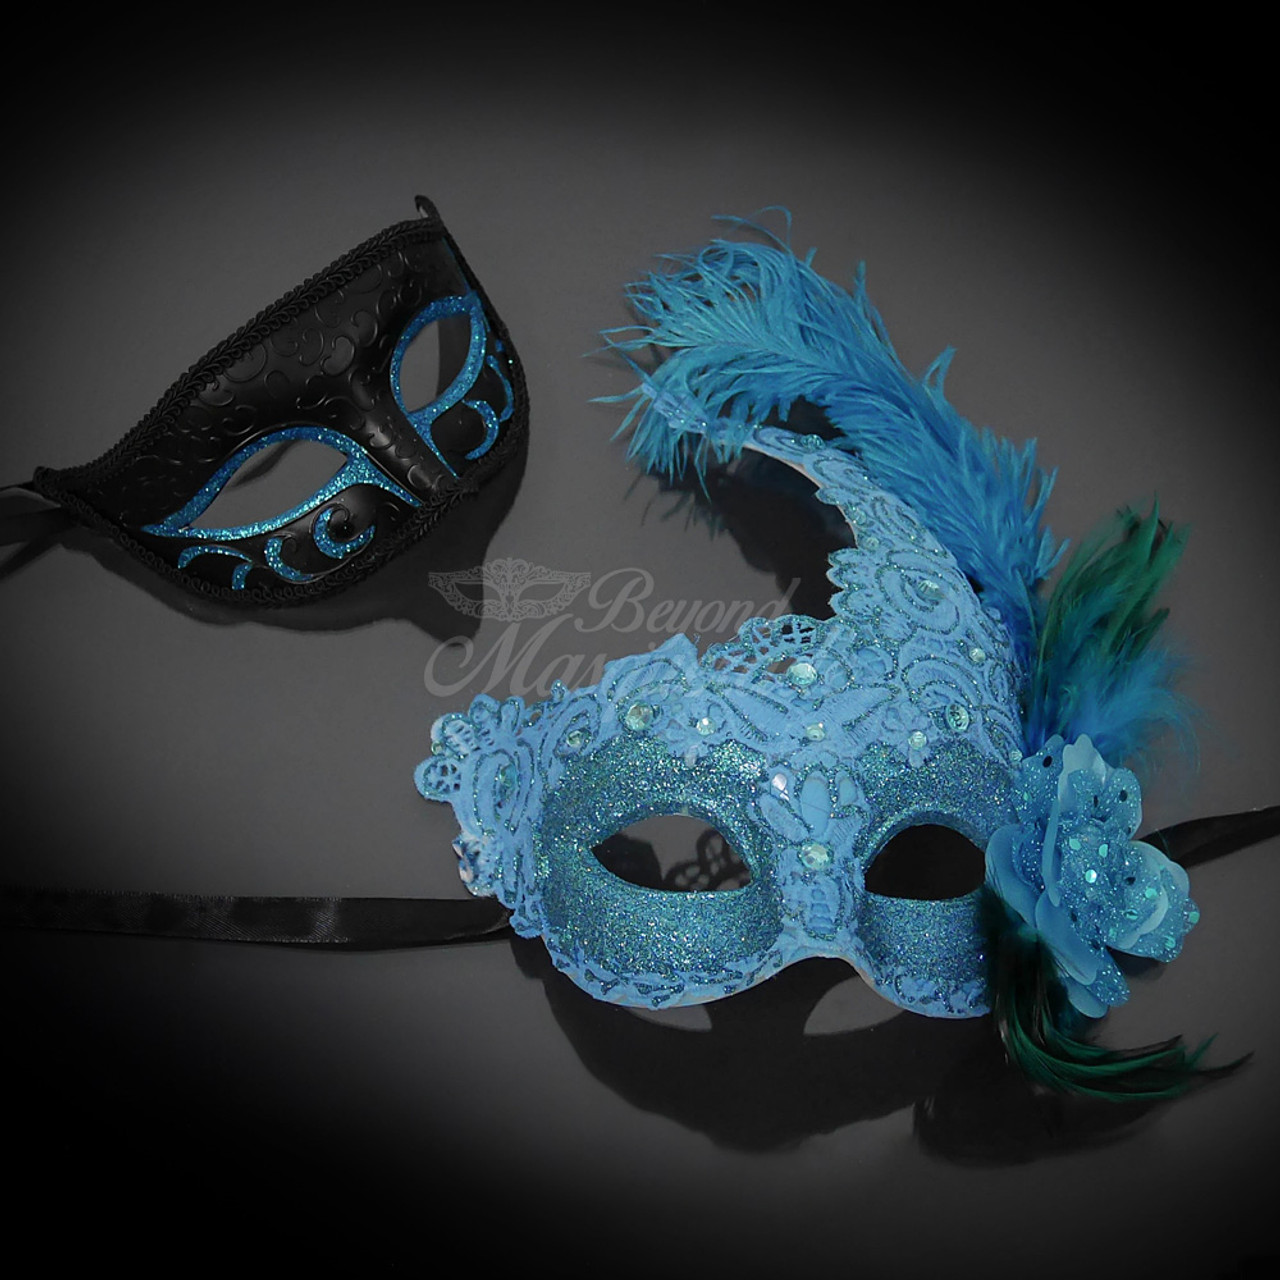 Halloween Couple's Masquerade Masks for Men Women US FREE SHIP